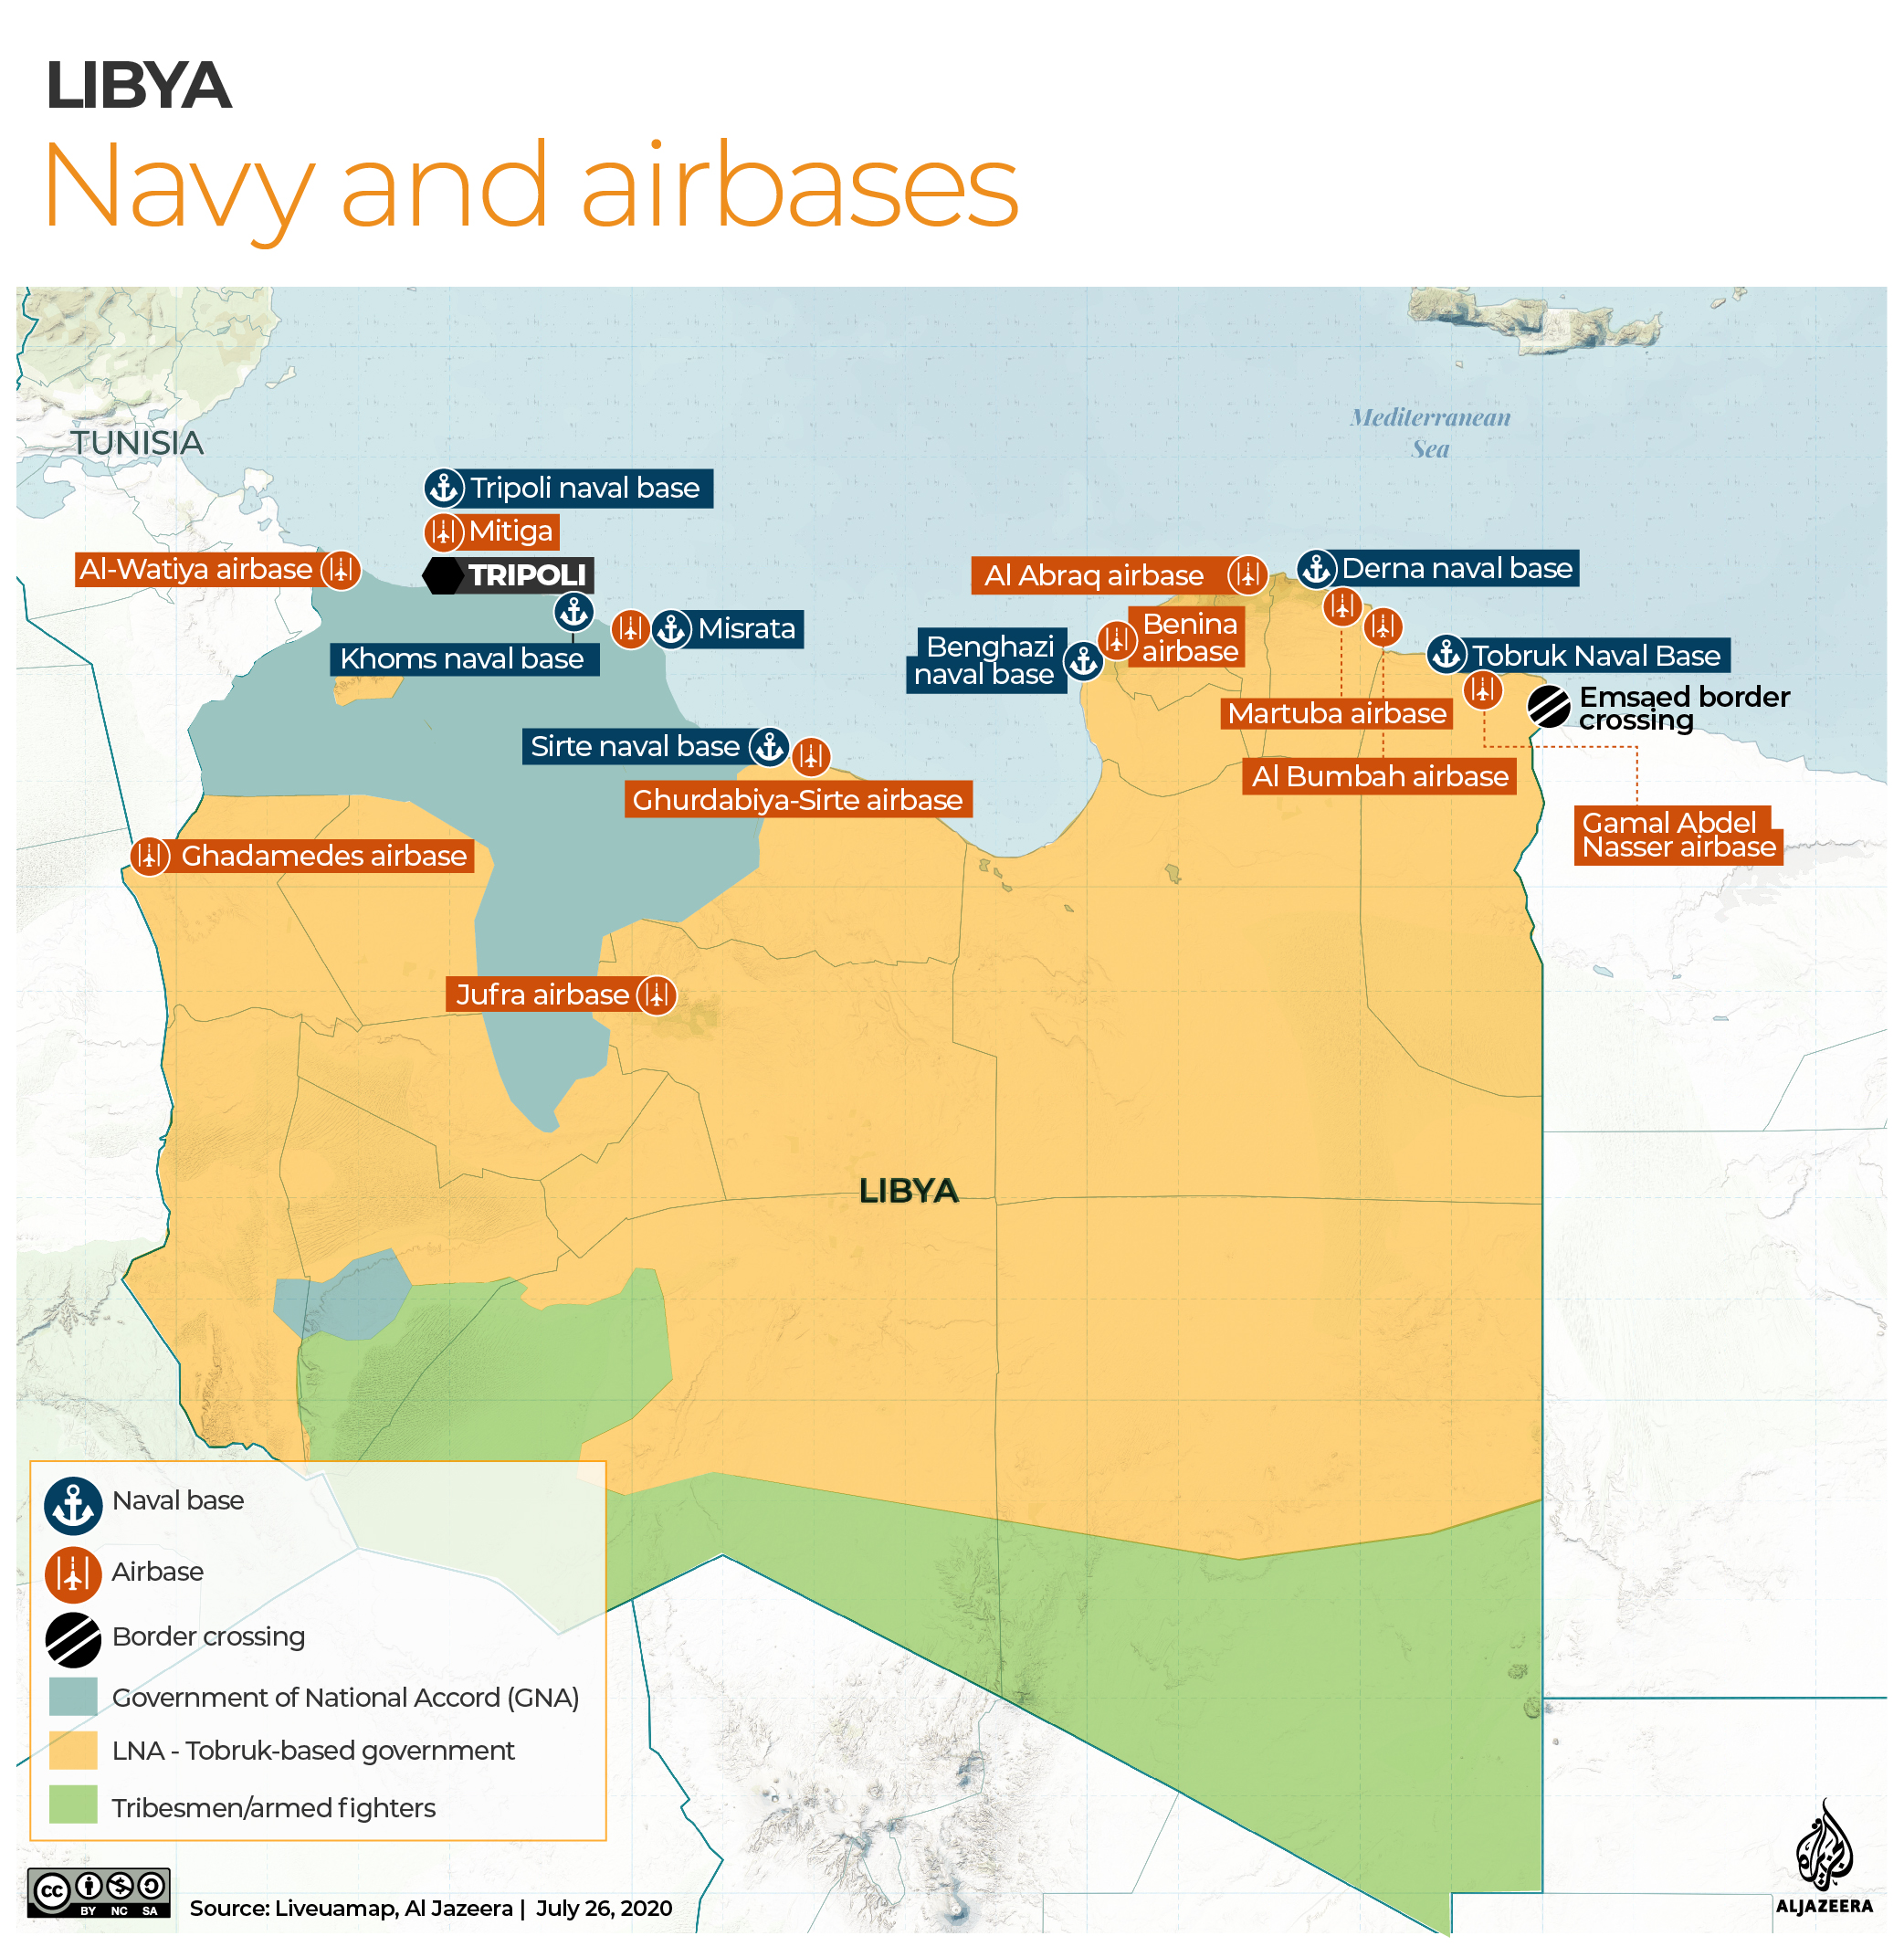 INTERACTIVE: Libya naval and airbases - July 27, 2020